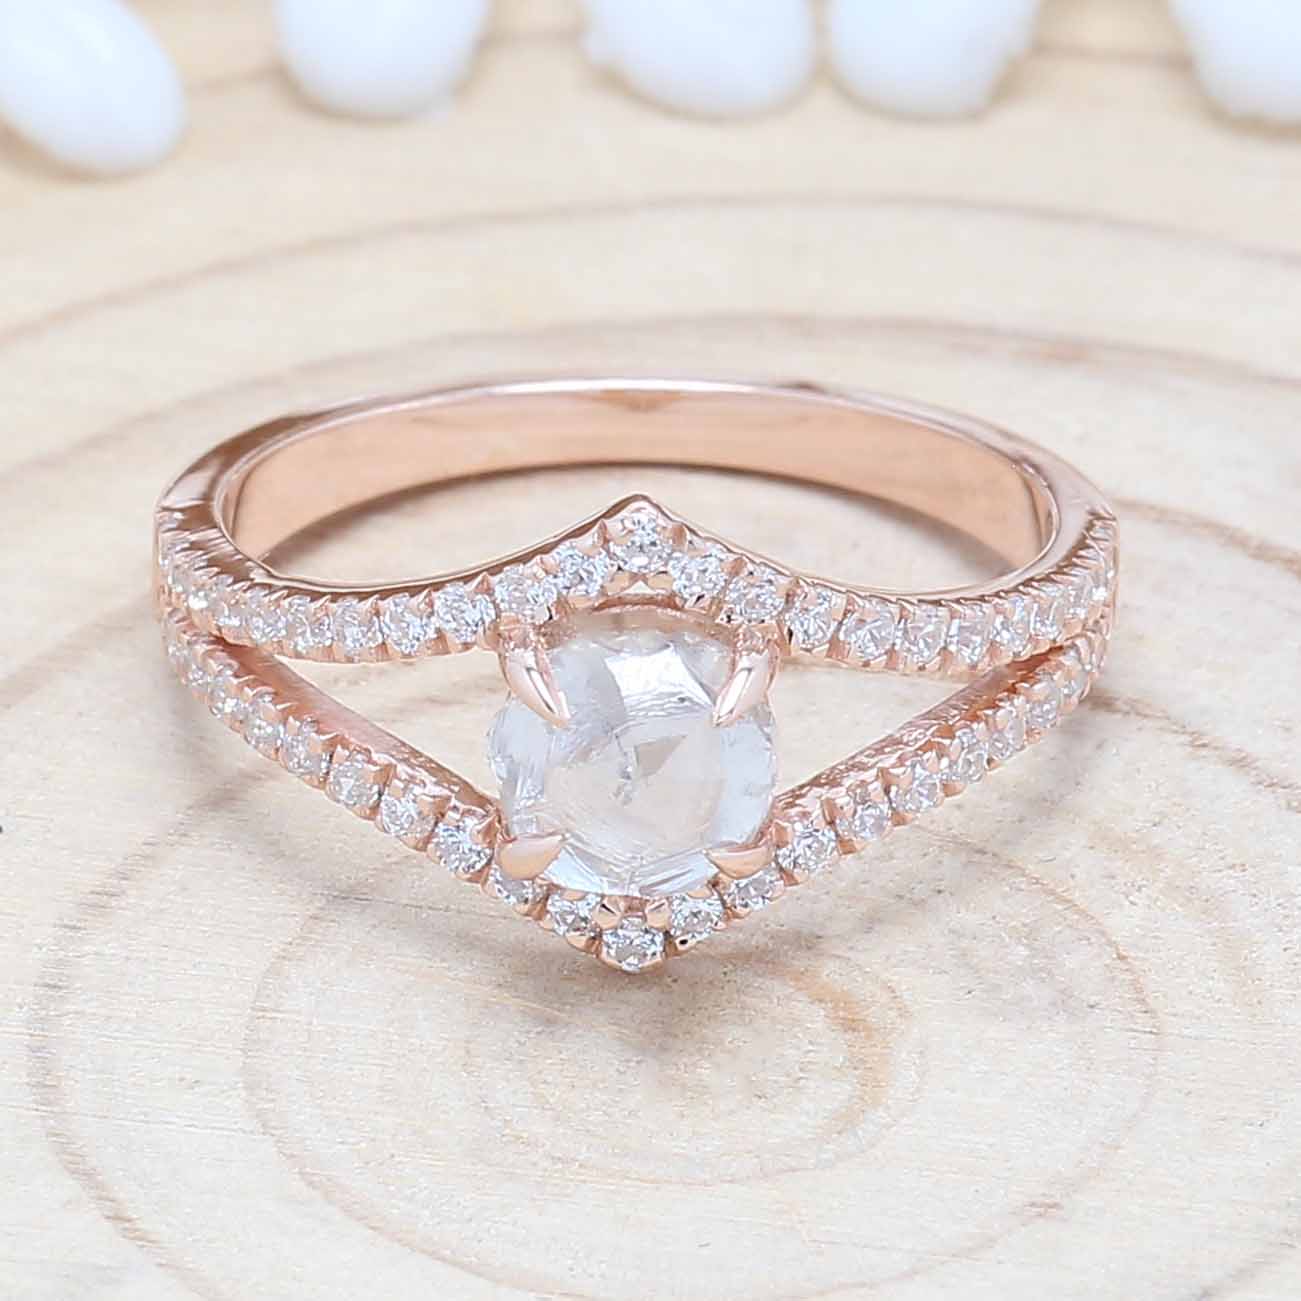 White Rough Diamond 14K Solid Rose White Yellow Gold Ring Engagement Wedding Gift Ring KD876